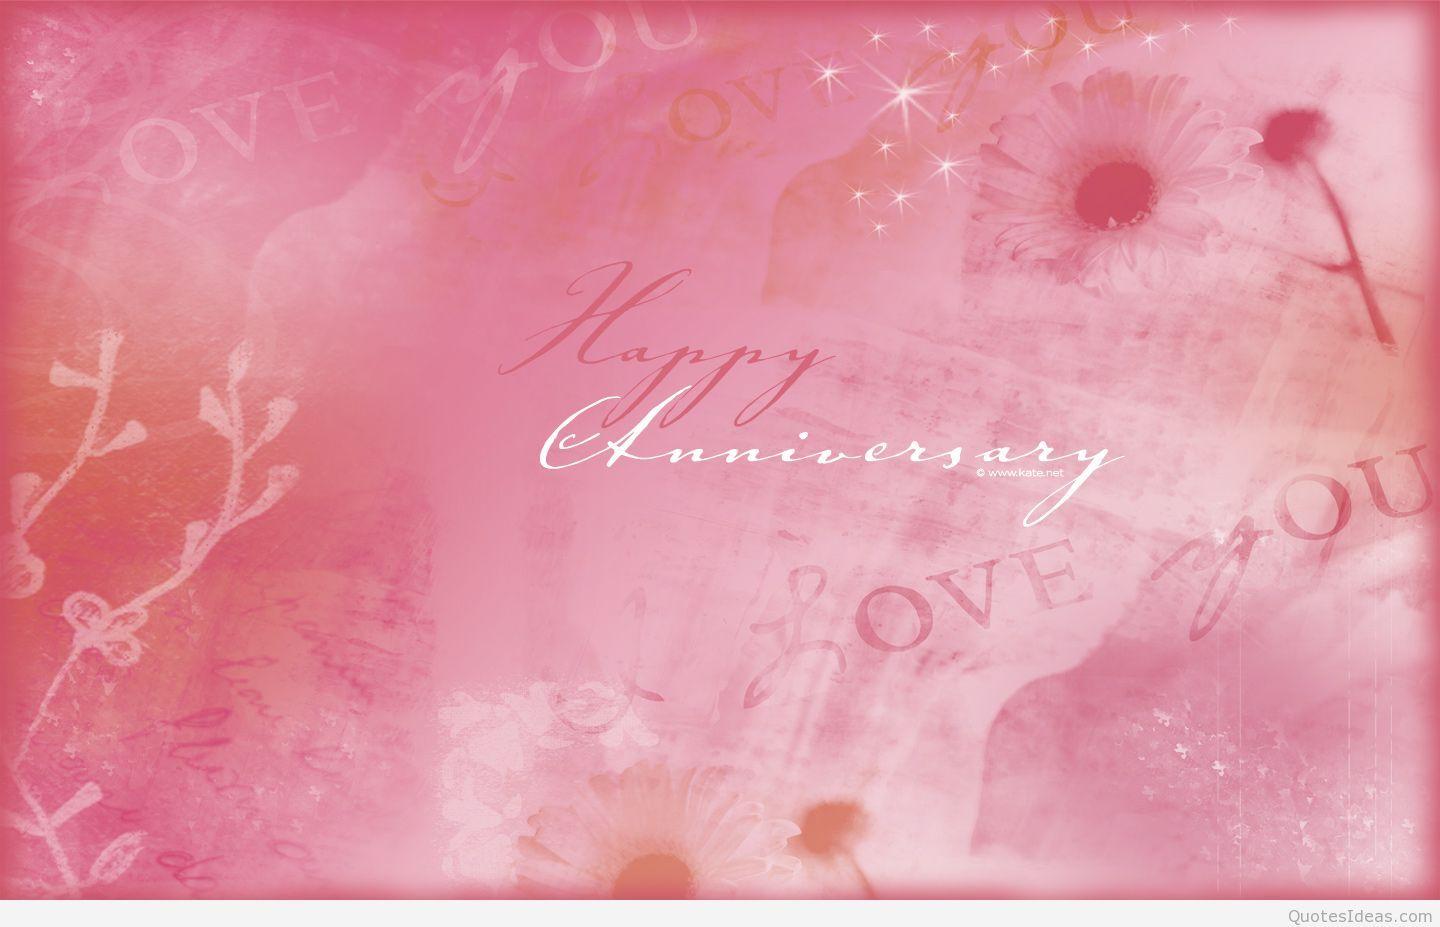 Background pink Happy Anniversary